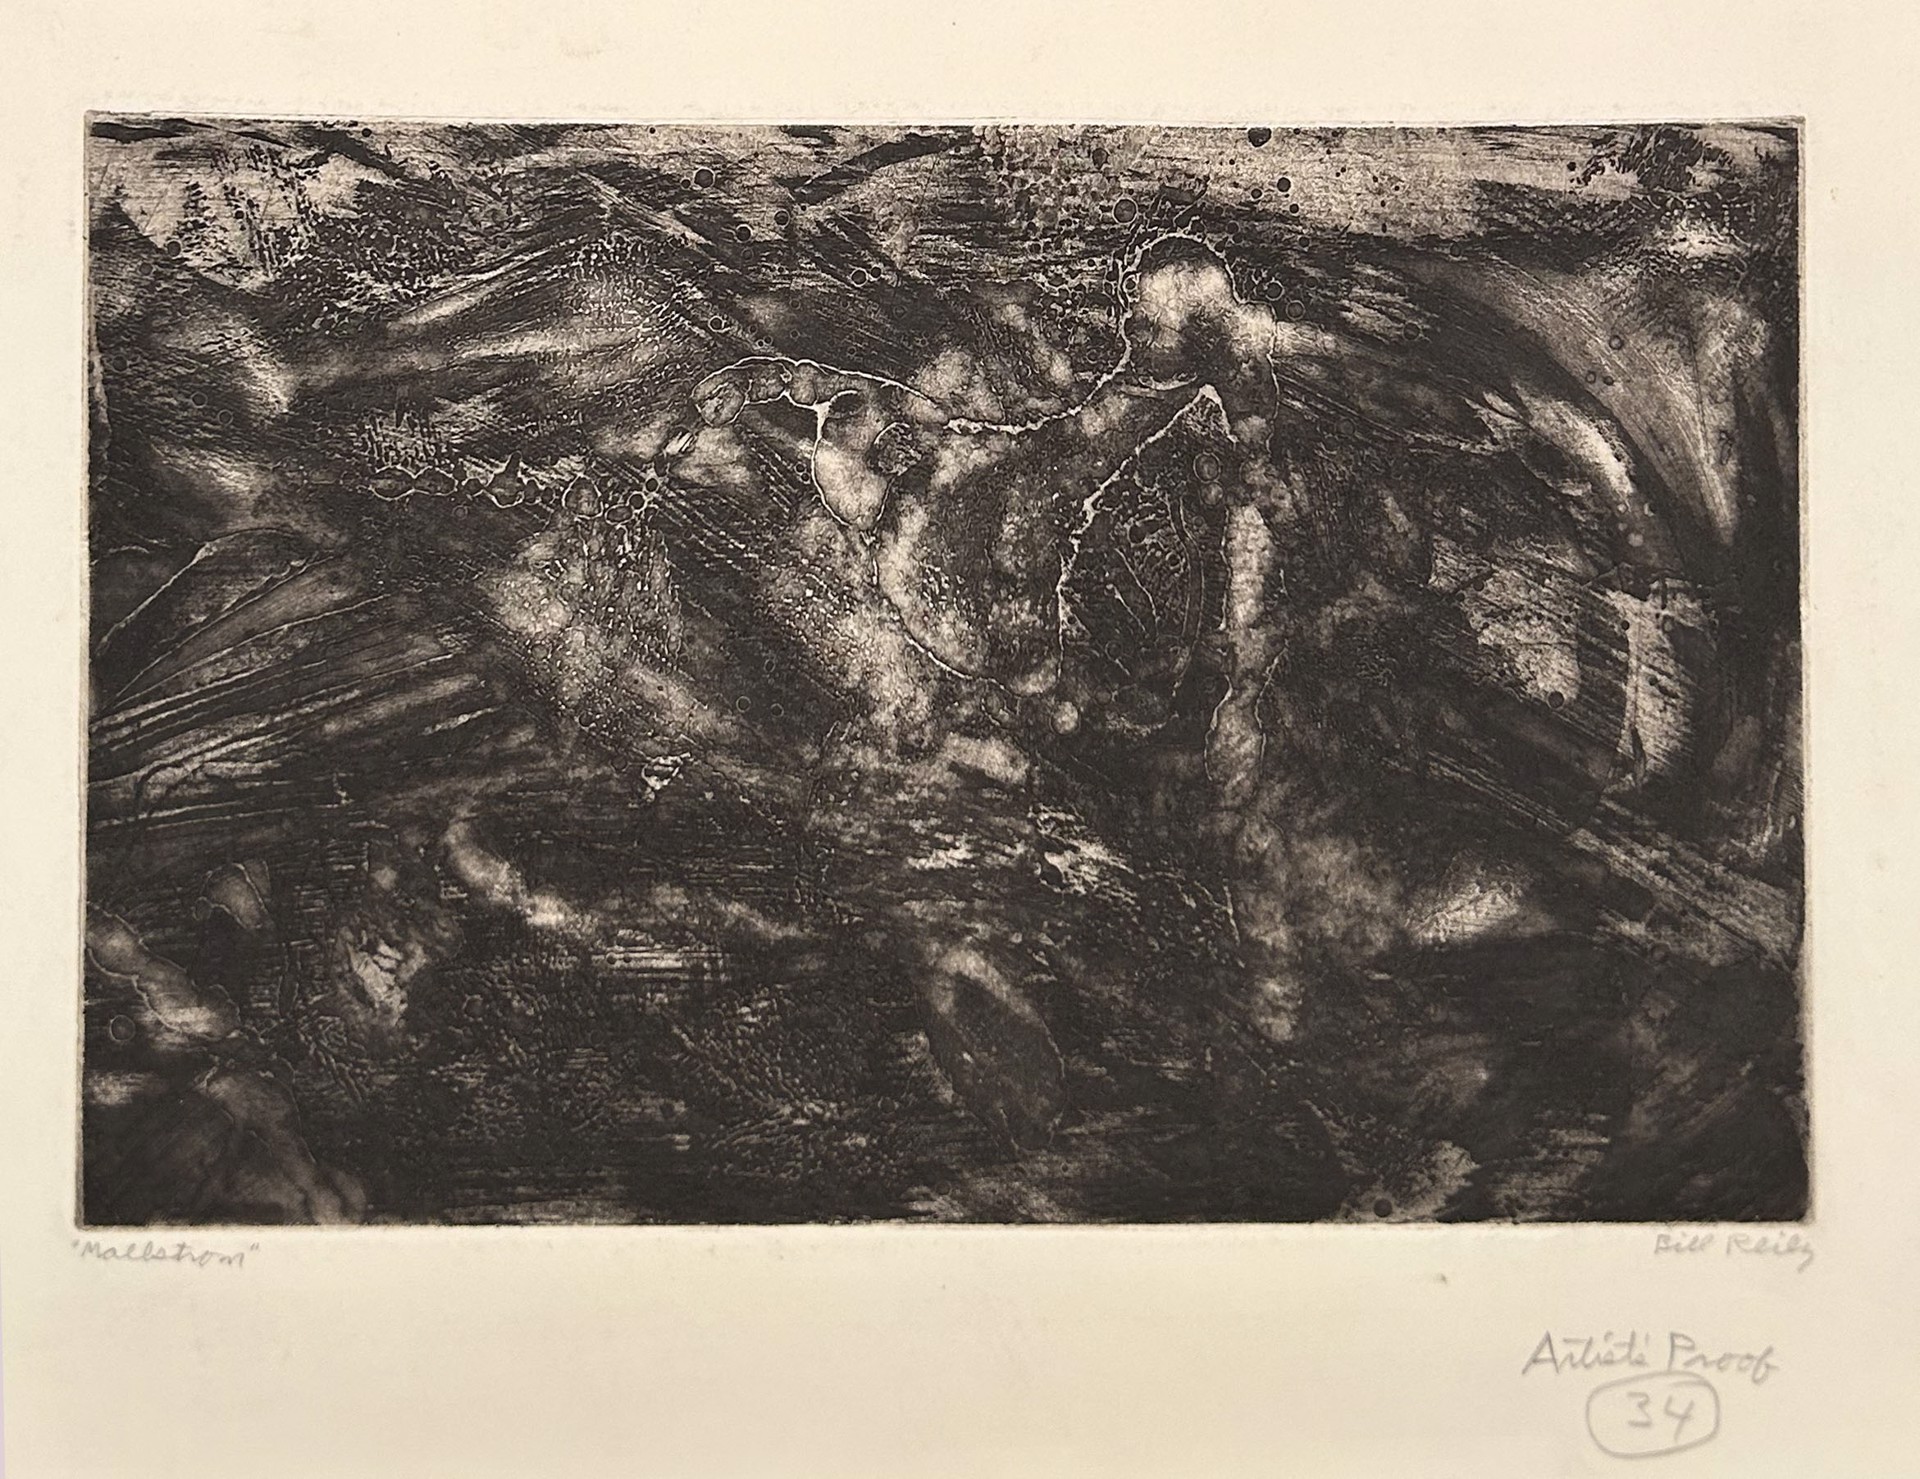 34a. Malestrom (Artist's proof) by Bill Reily Prints